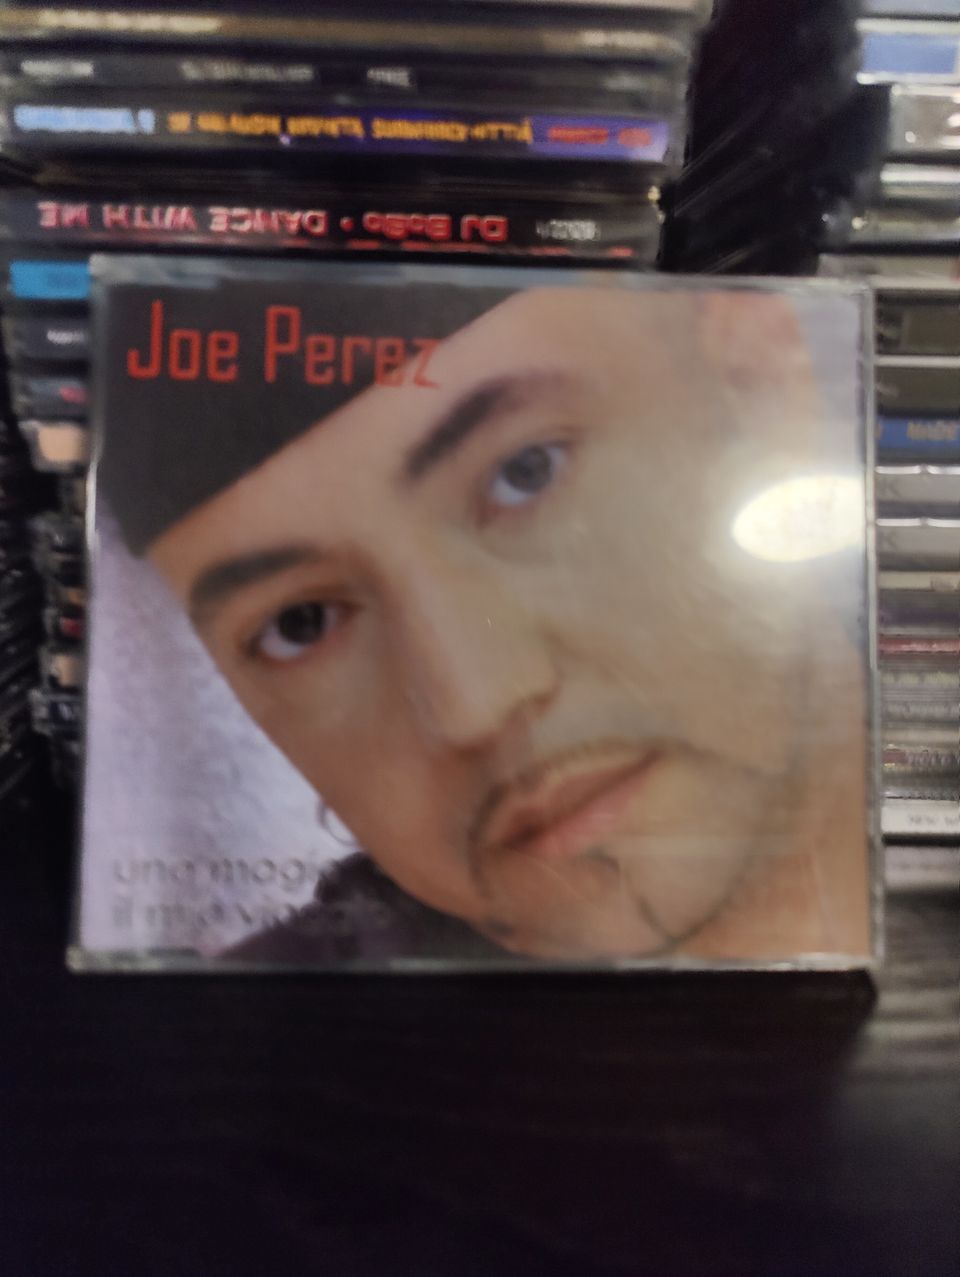 Joe Perez cds